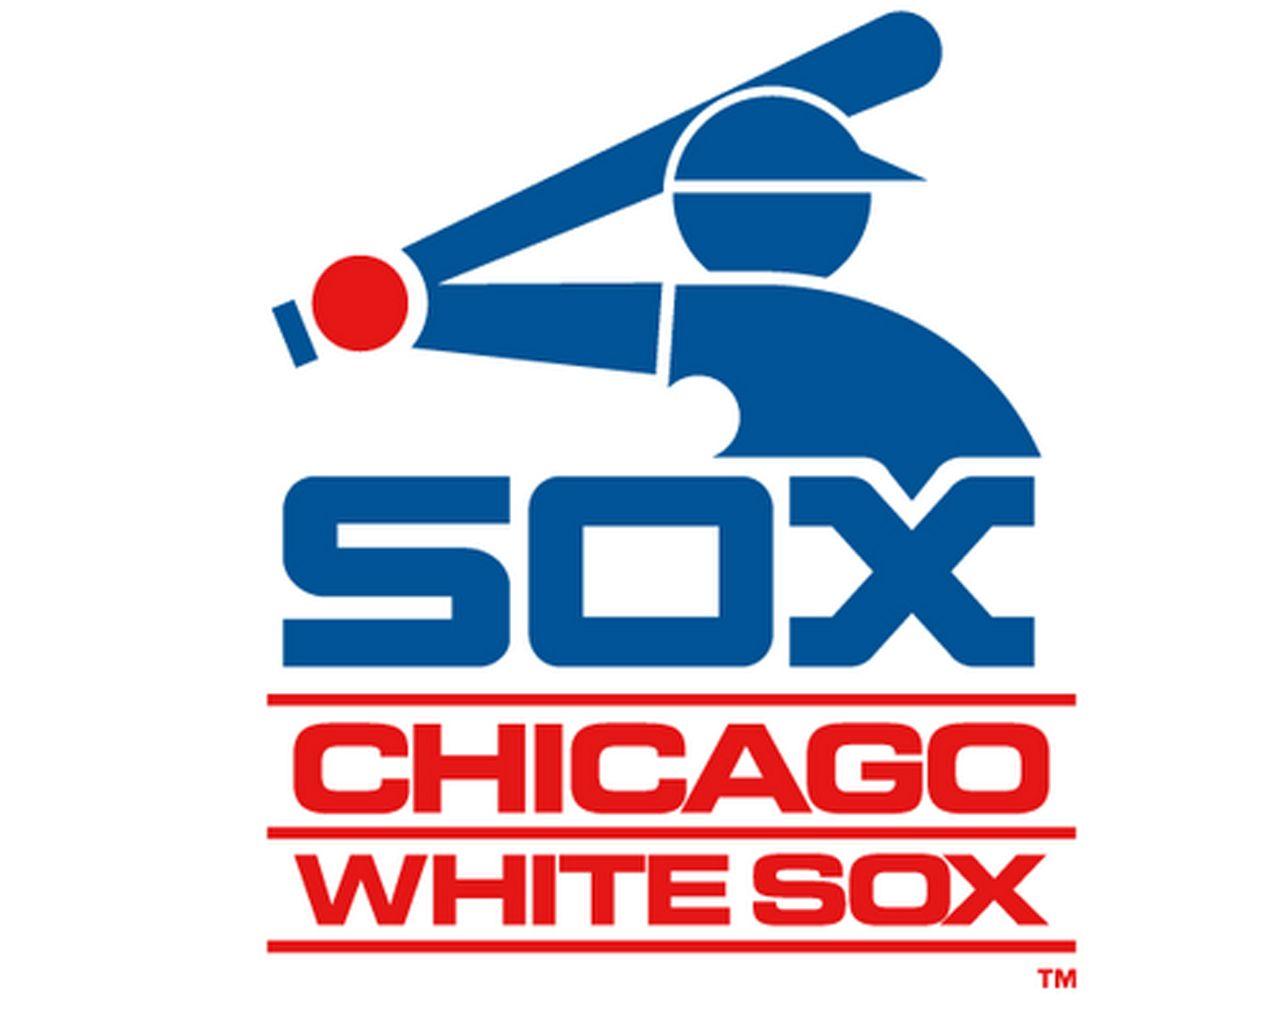 White Sox Old Logo - Chicago White Sox Old Logo wallpaper